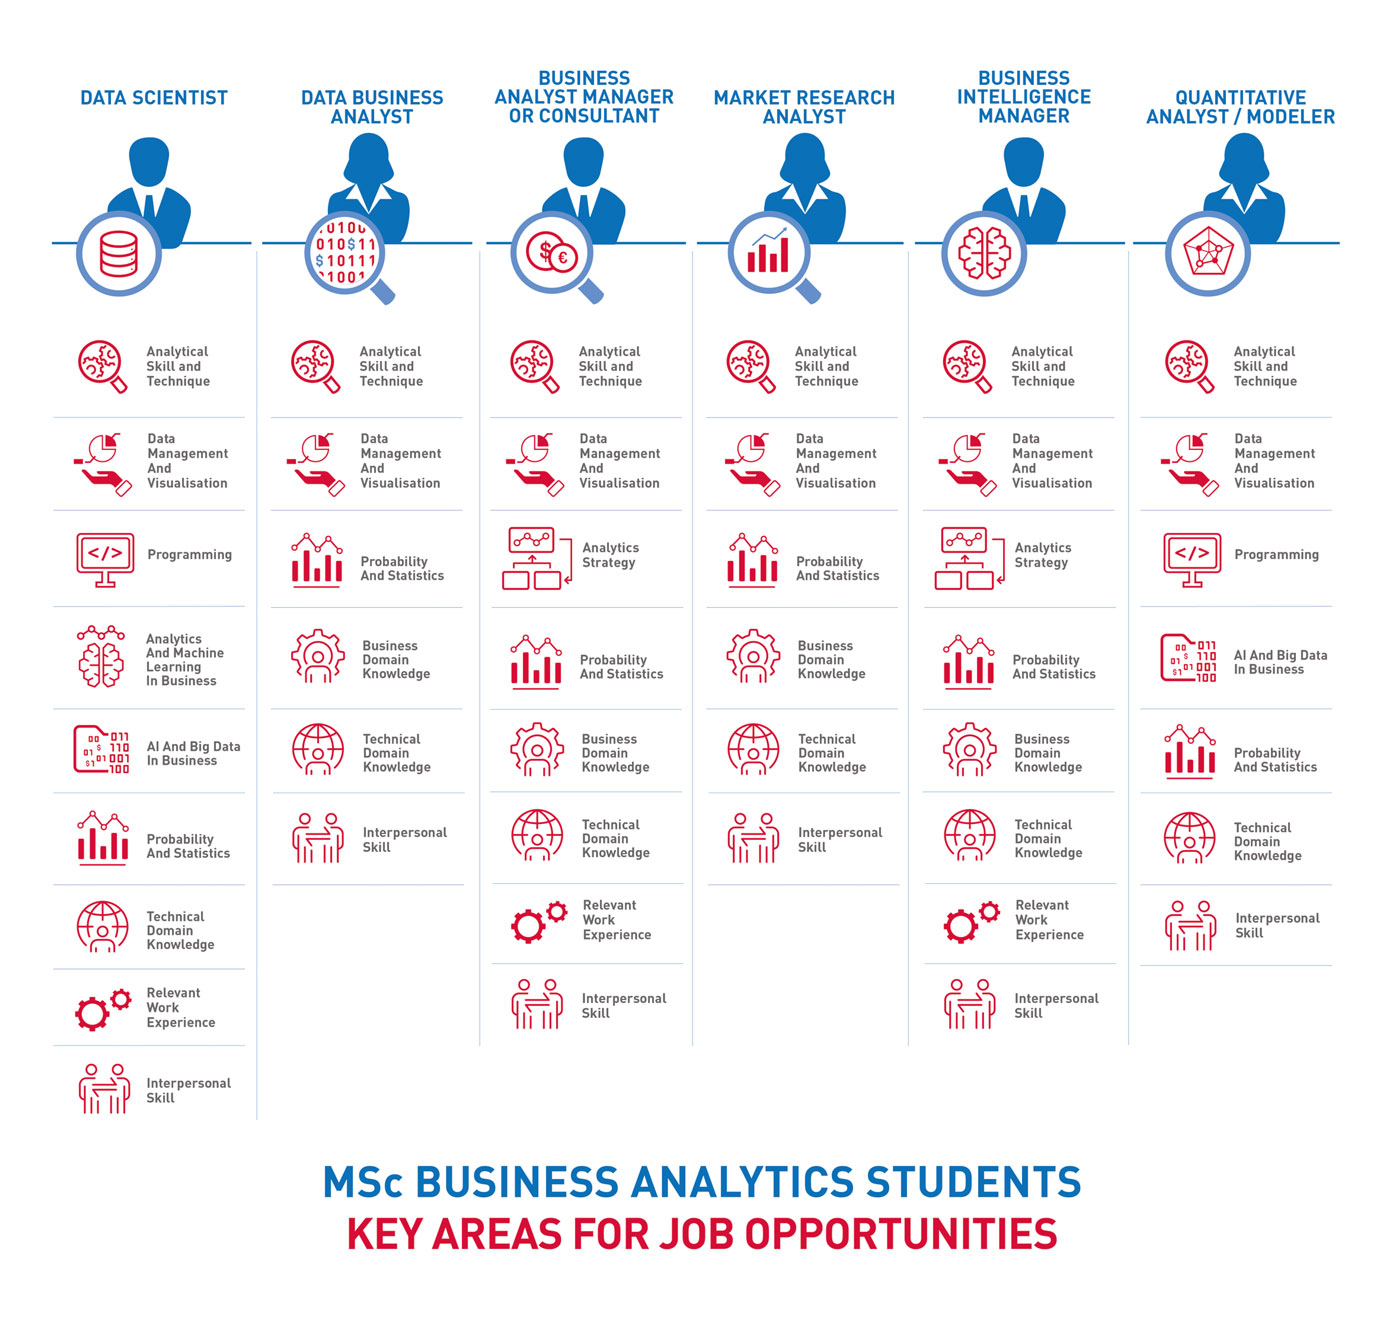 NTU MSc Business Analytics - Job Opportunities